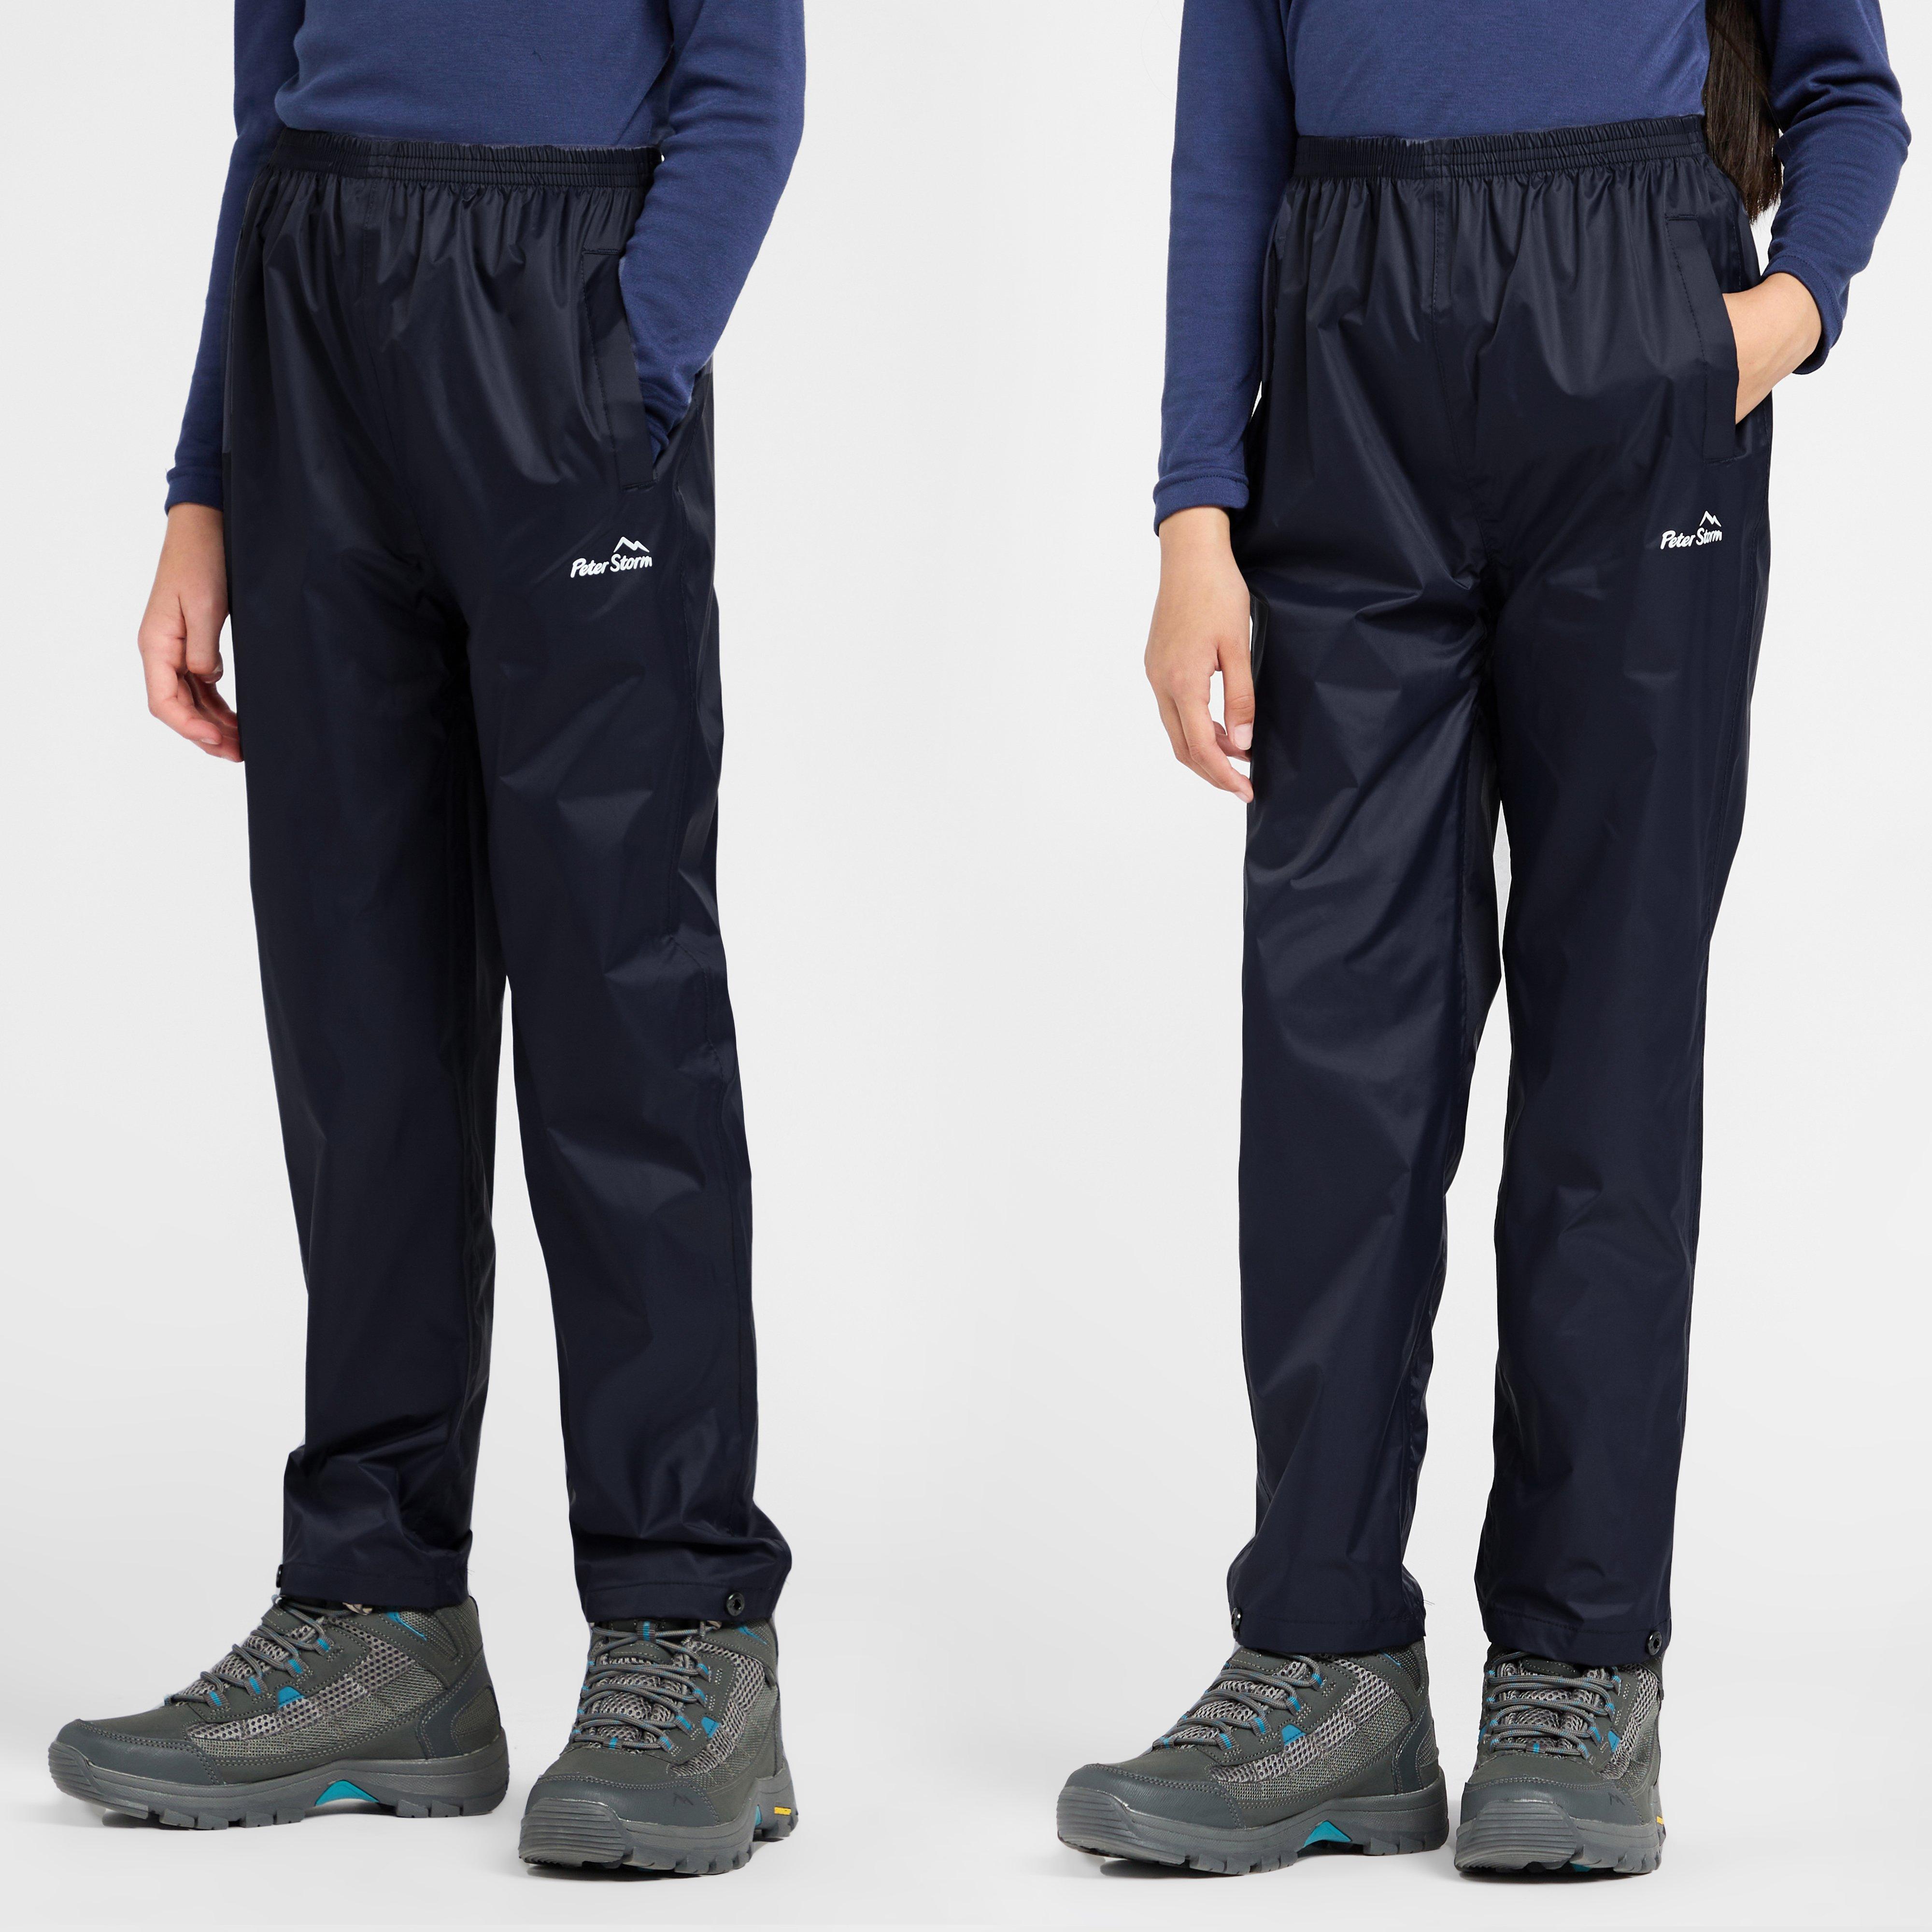 Peter Storm Kids' Unisex Packable Pants - Navy, Navy